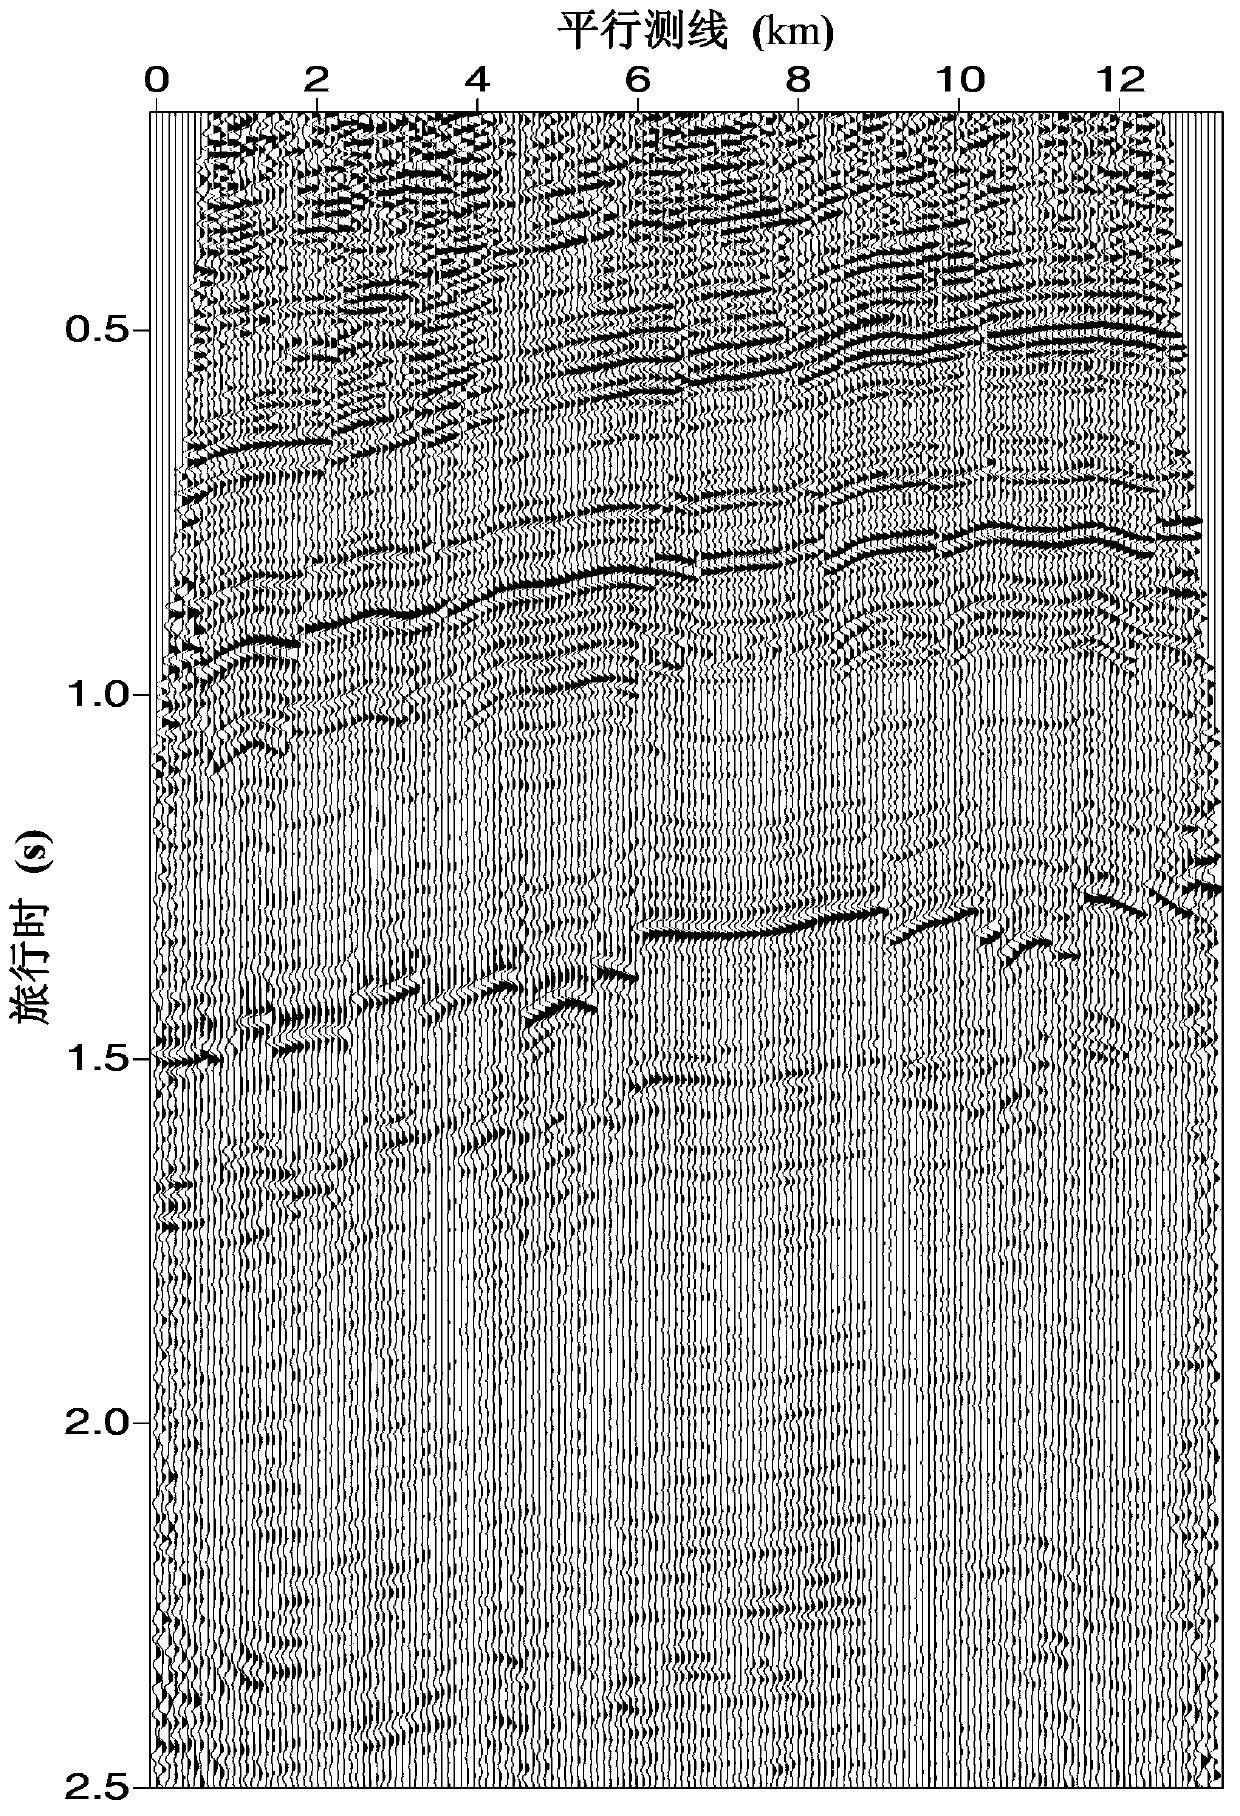 Method for increasing seismic imaging resolution ratio